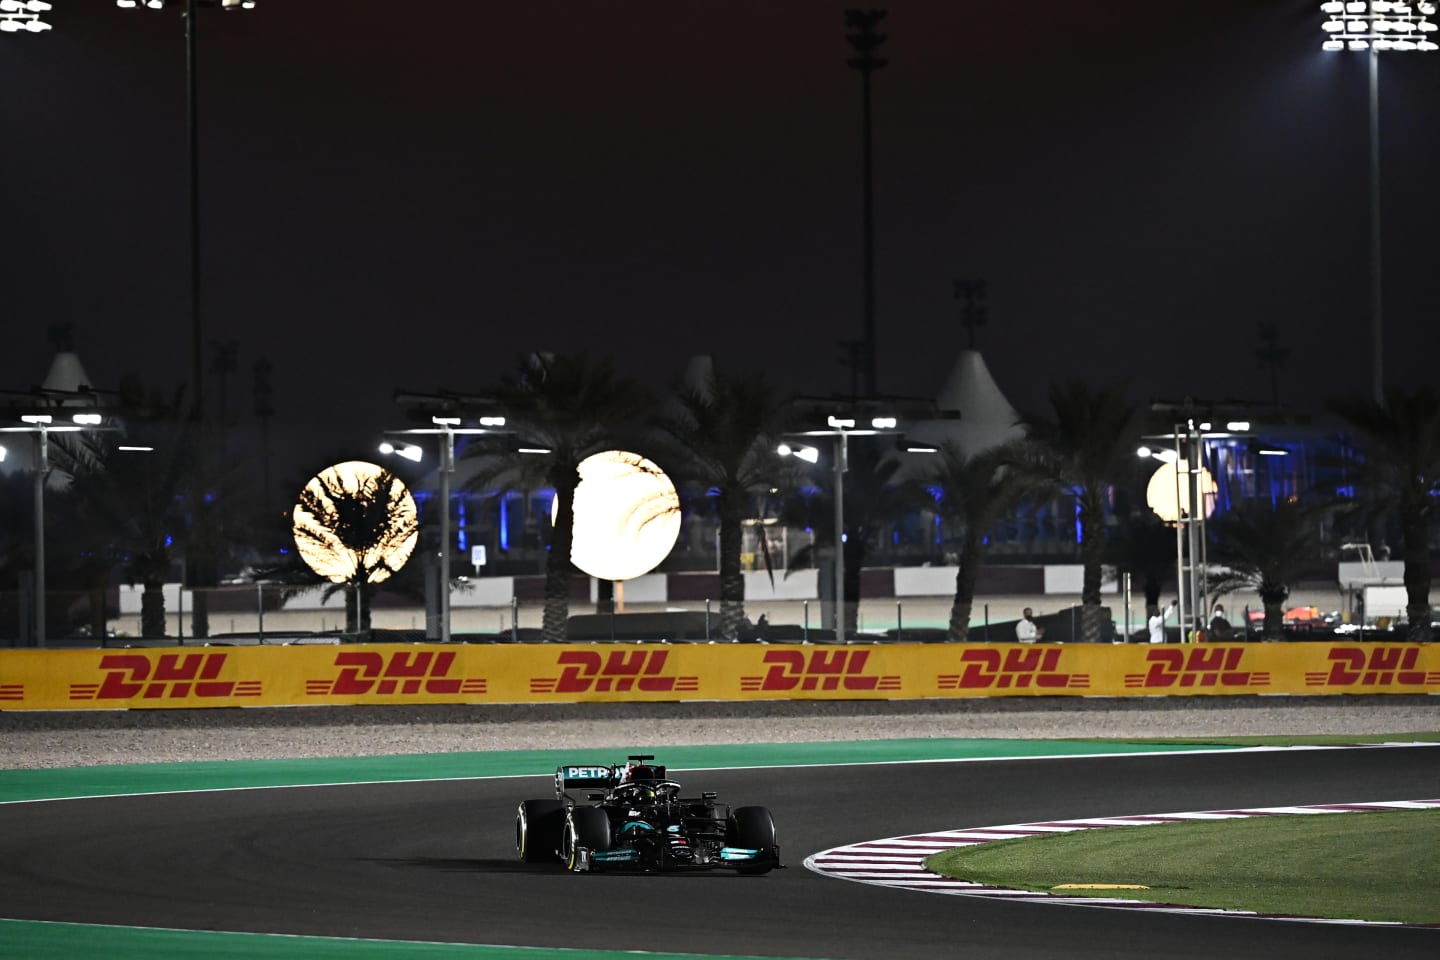 DOHA, QATAR - NOVEMBER 21: Lewis Hamilton of Great Britain driving the (44) Mercedes AMG Petronas